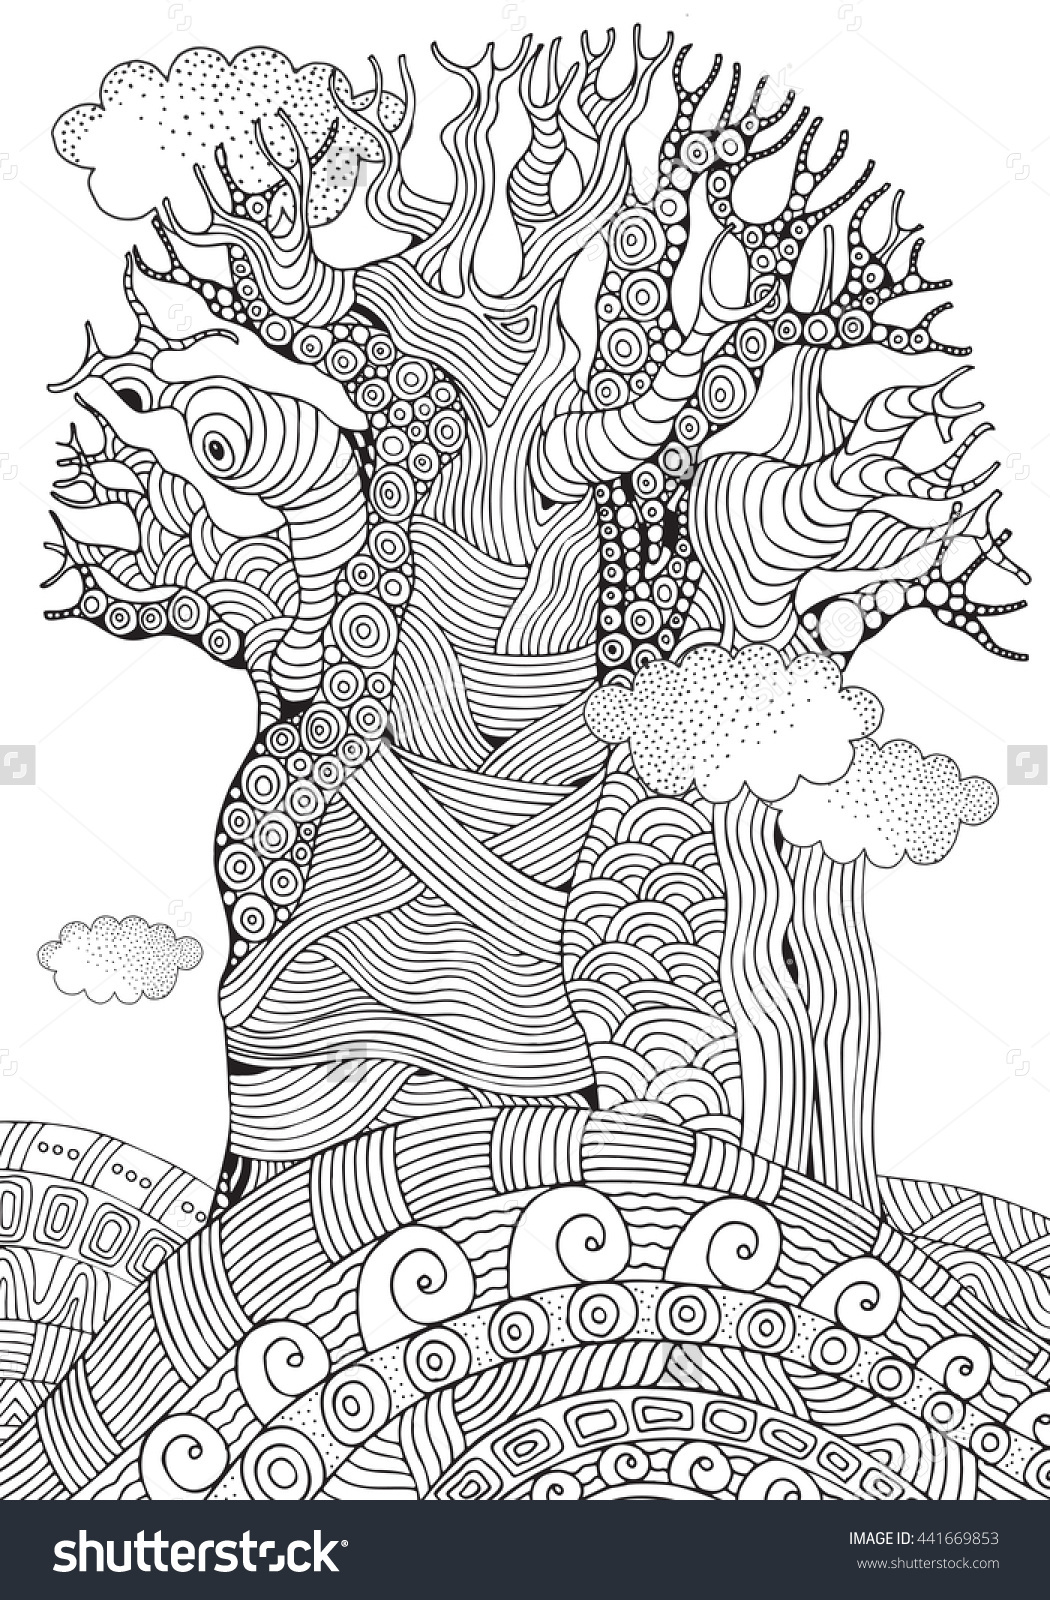 Baobab Tree coloring #4, Download drawings